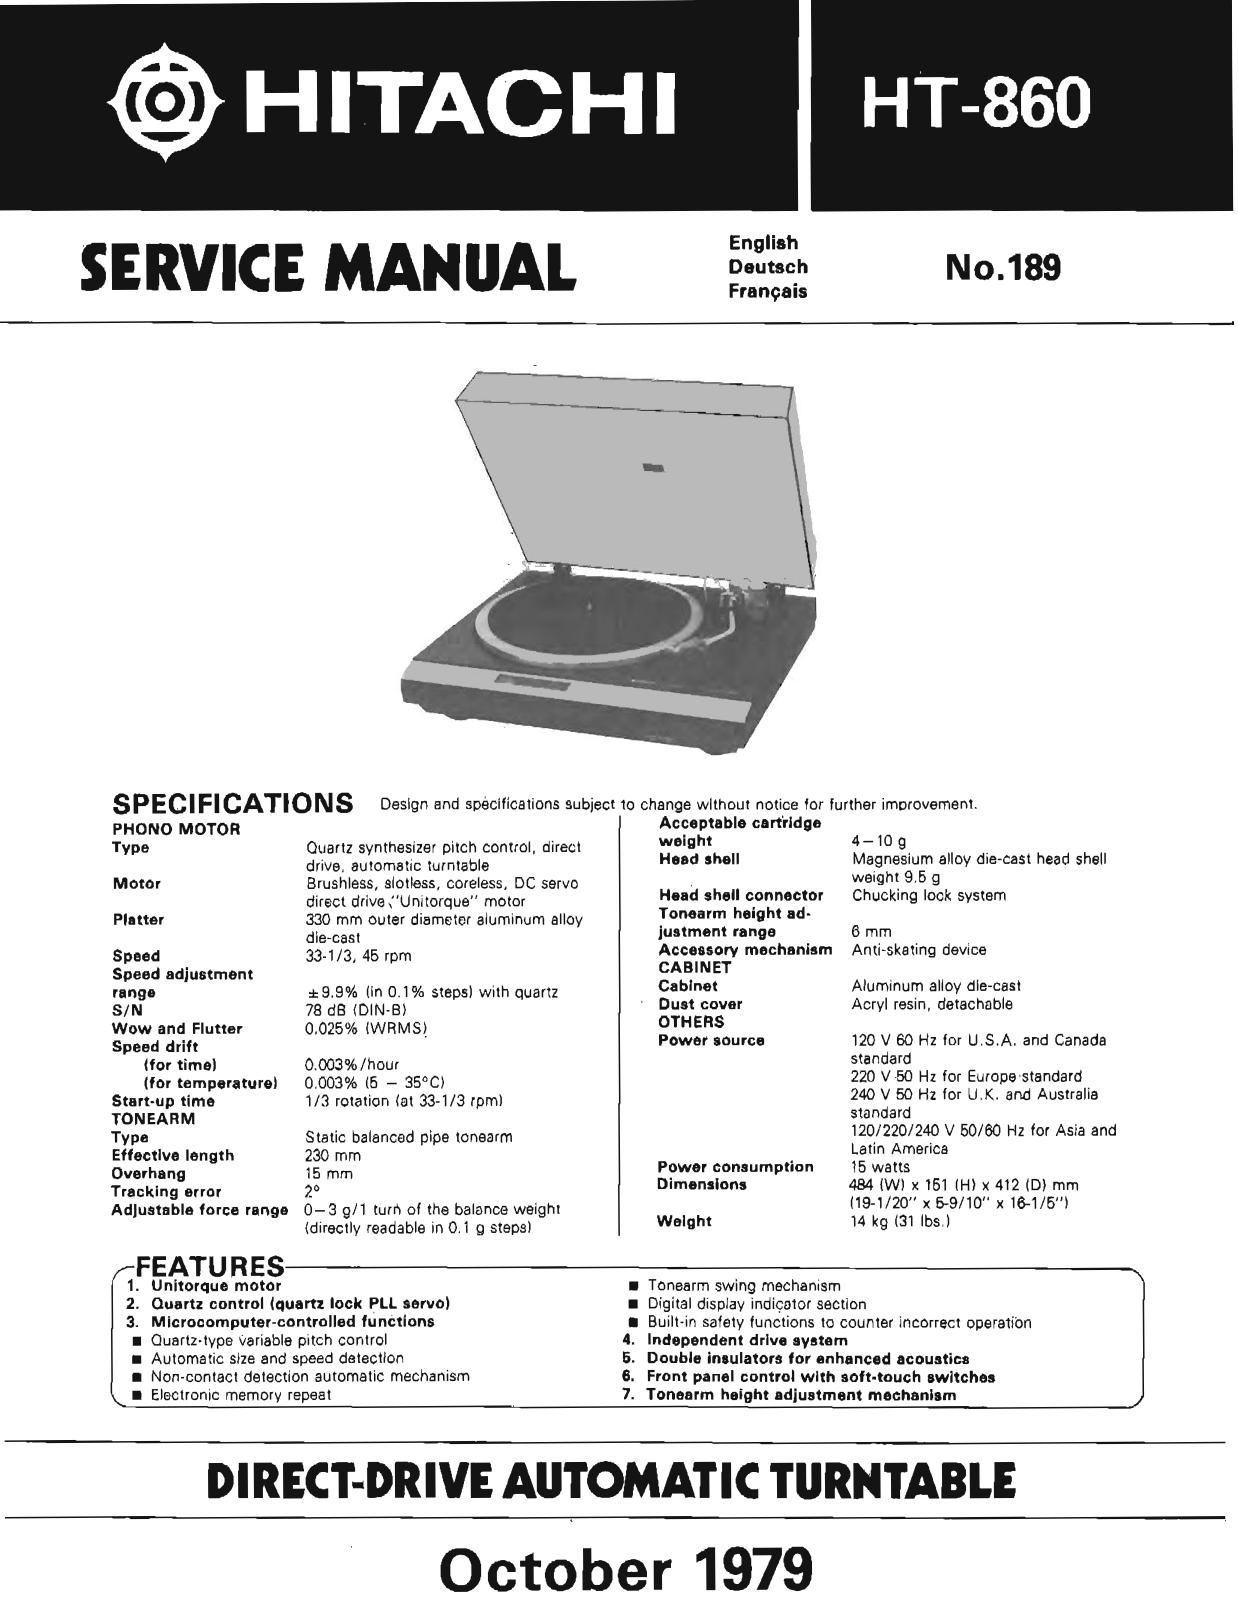 Hitachi HT-860 Service Manual